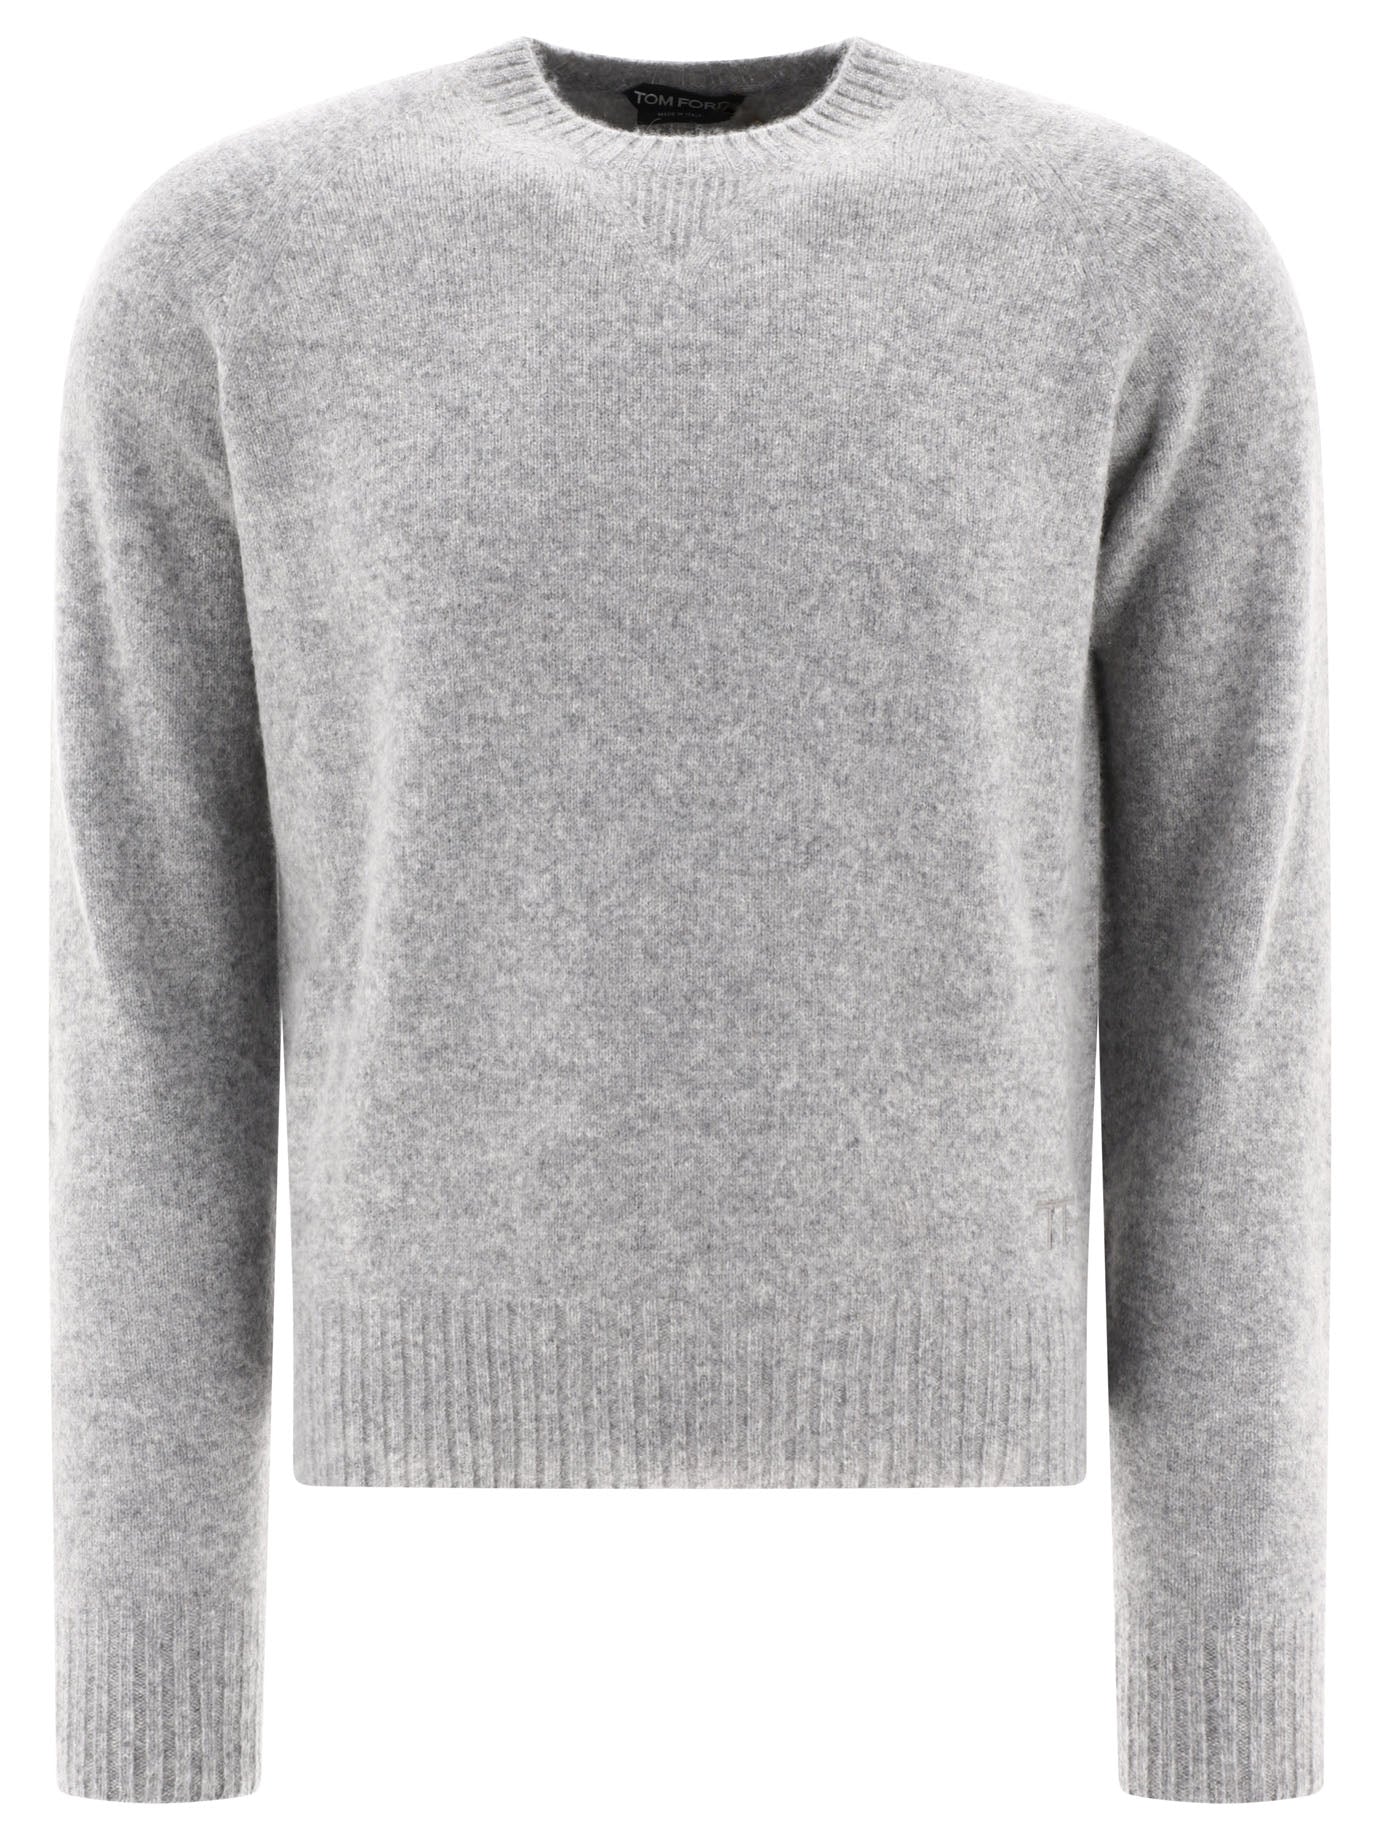 Tom Ford Cashmere Crewneck Sweater Knitwear Grey